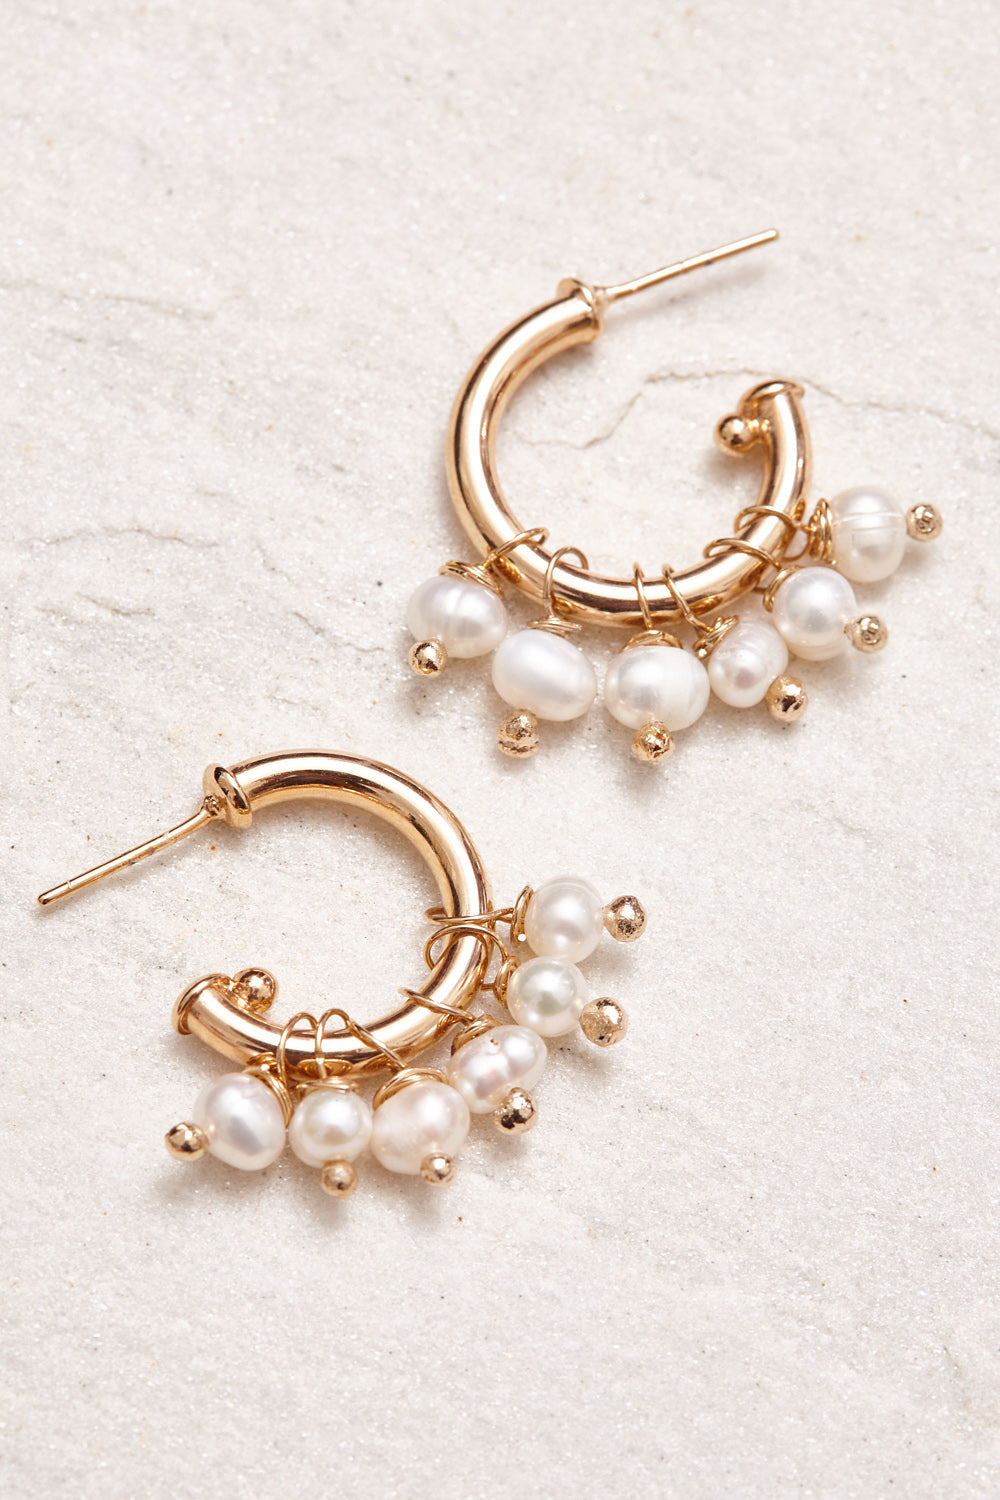 18K gold-plated hoops  freshwater pearls. Handmade in Brazil. 